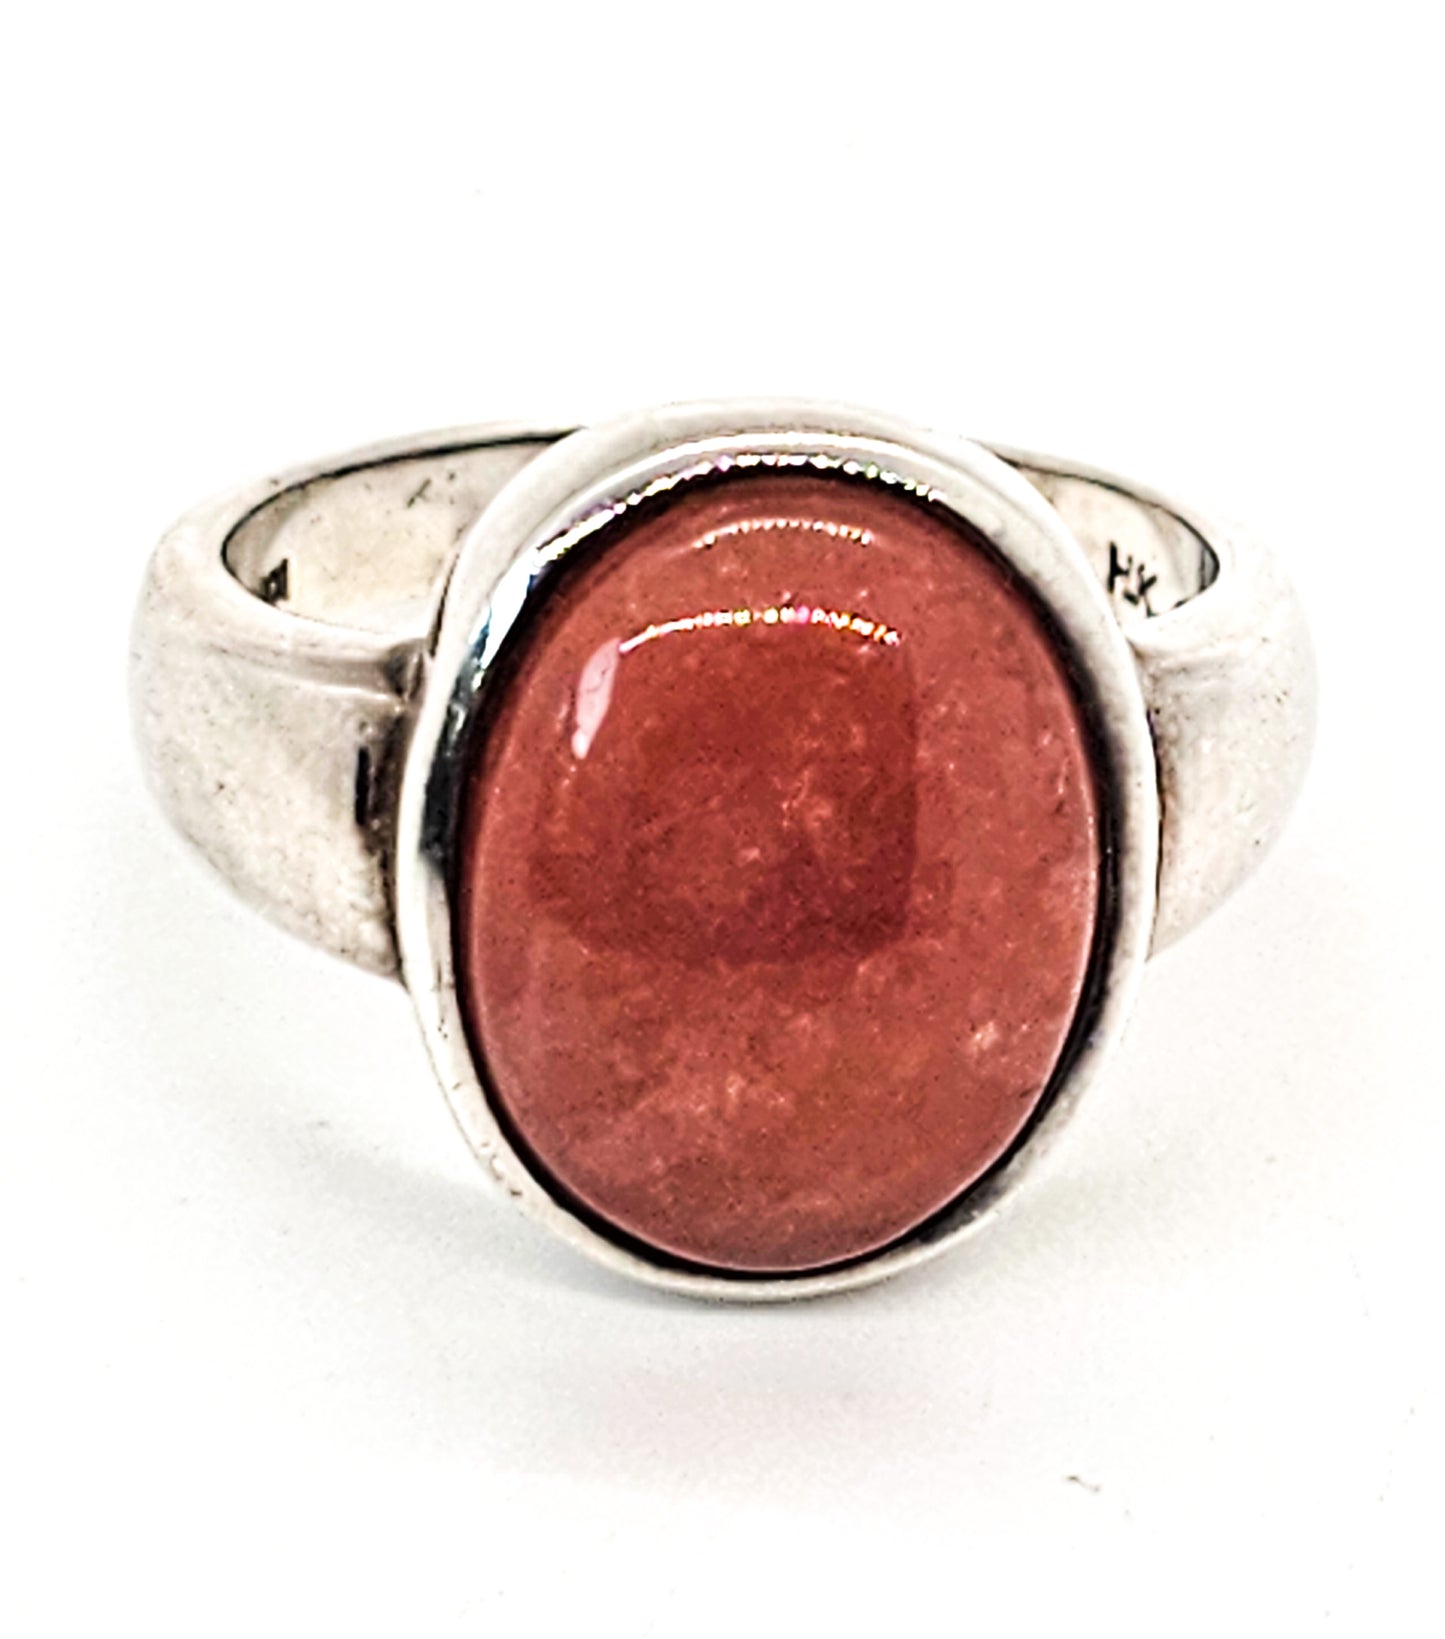 Badavichi Rhodonite pink gemstone signed vintage sterling silver ring size 10